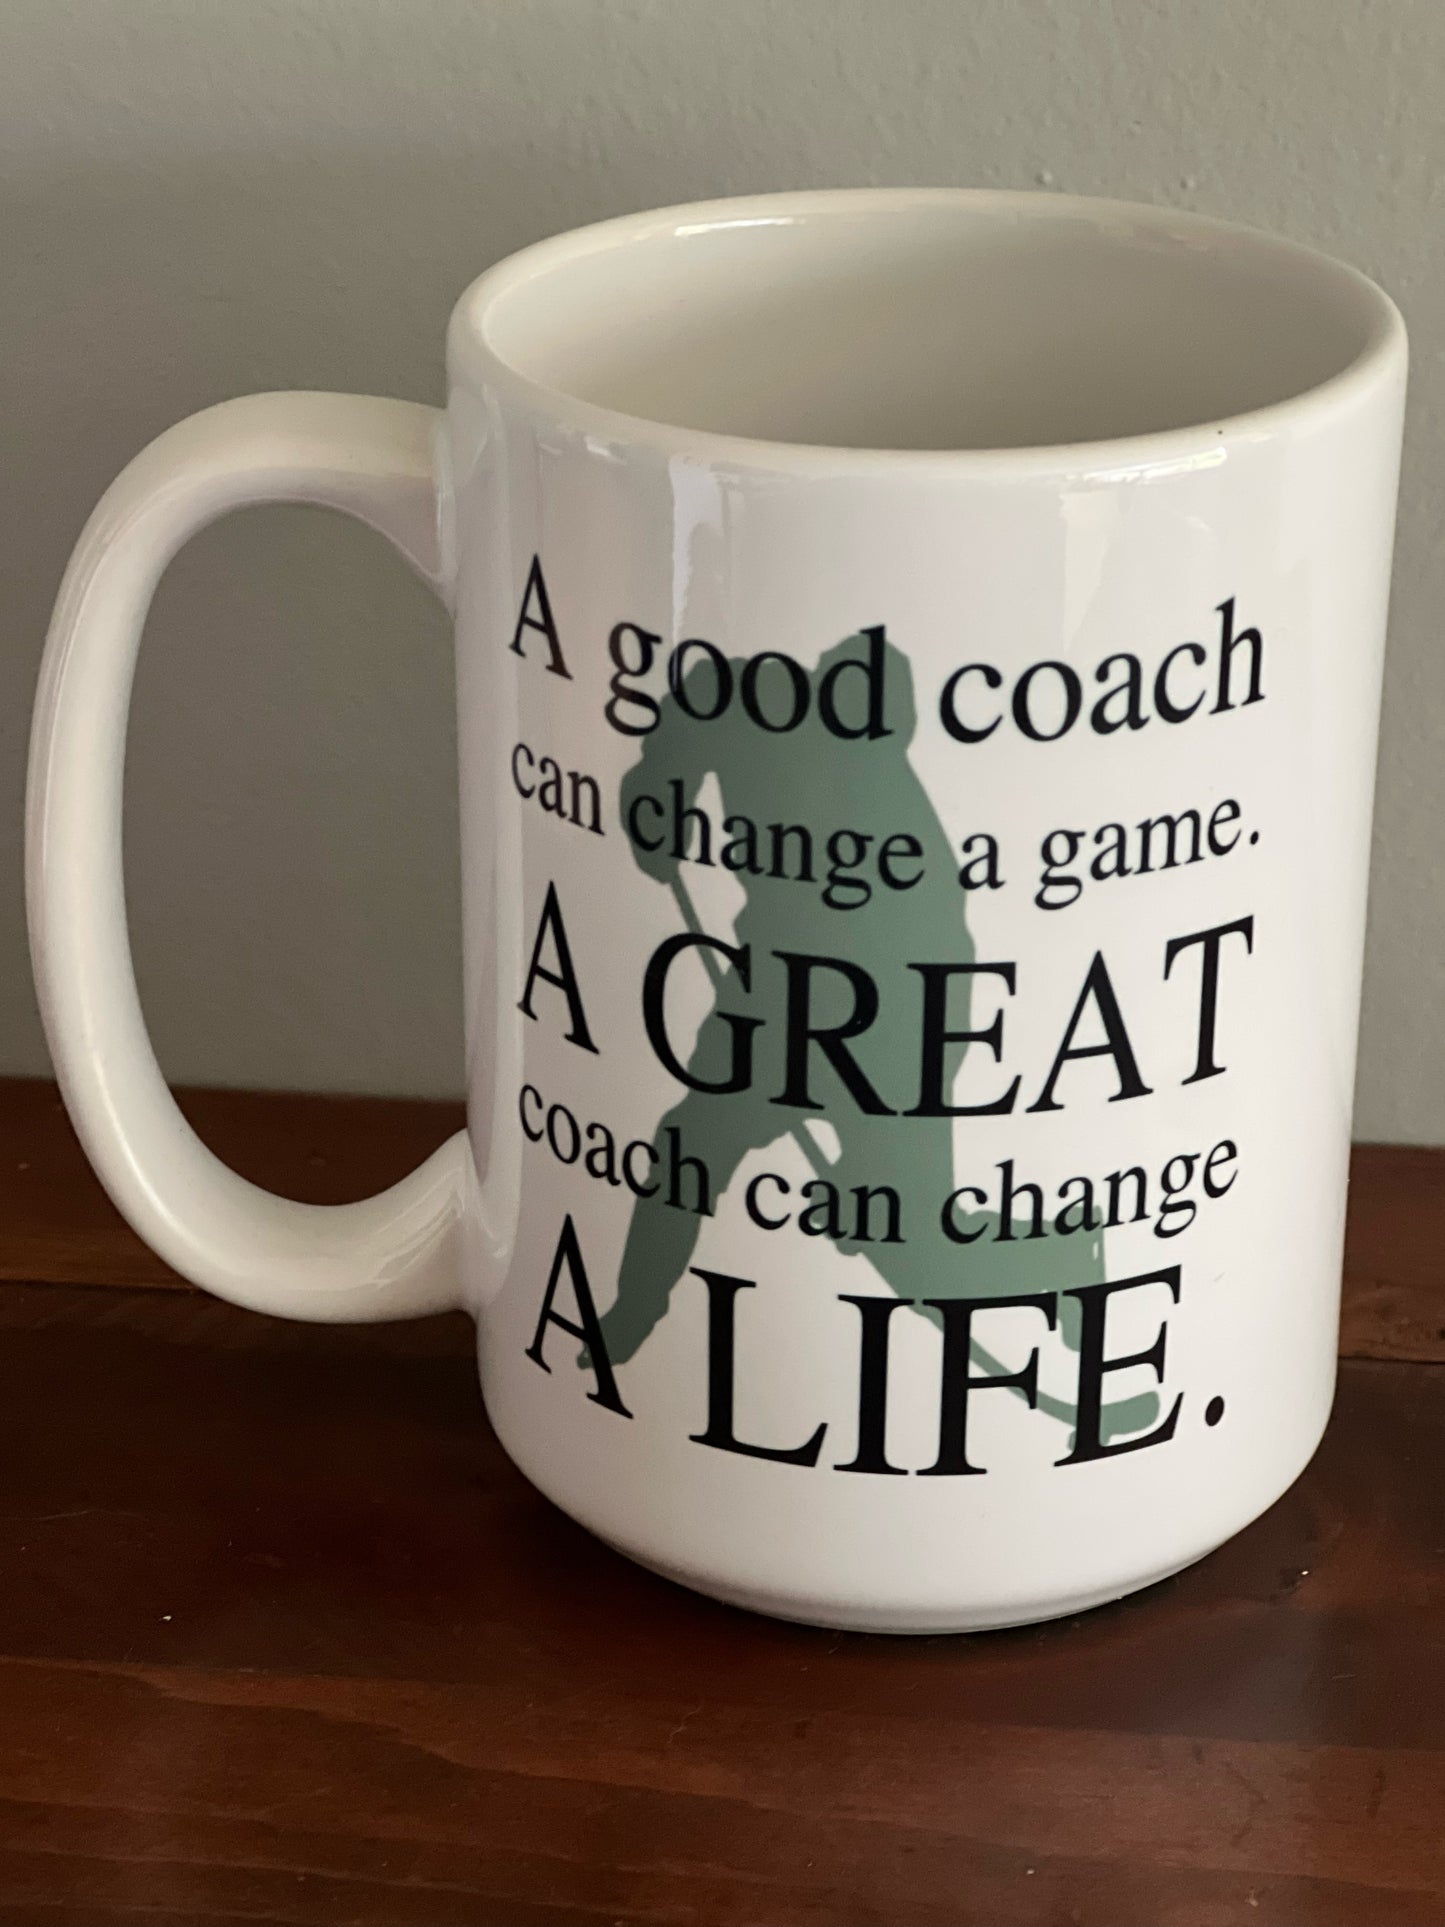 Great coach mug